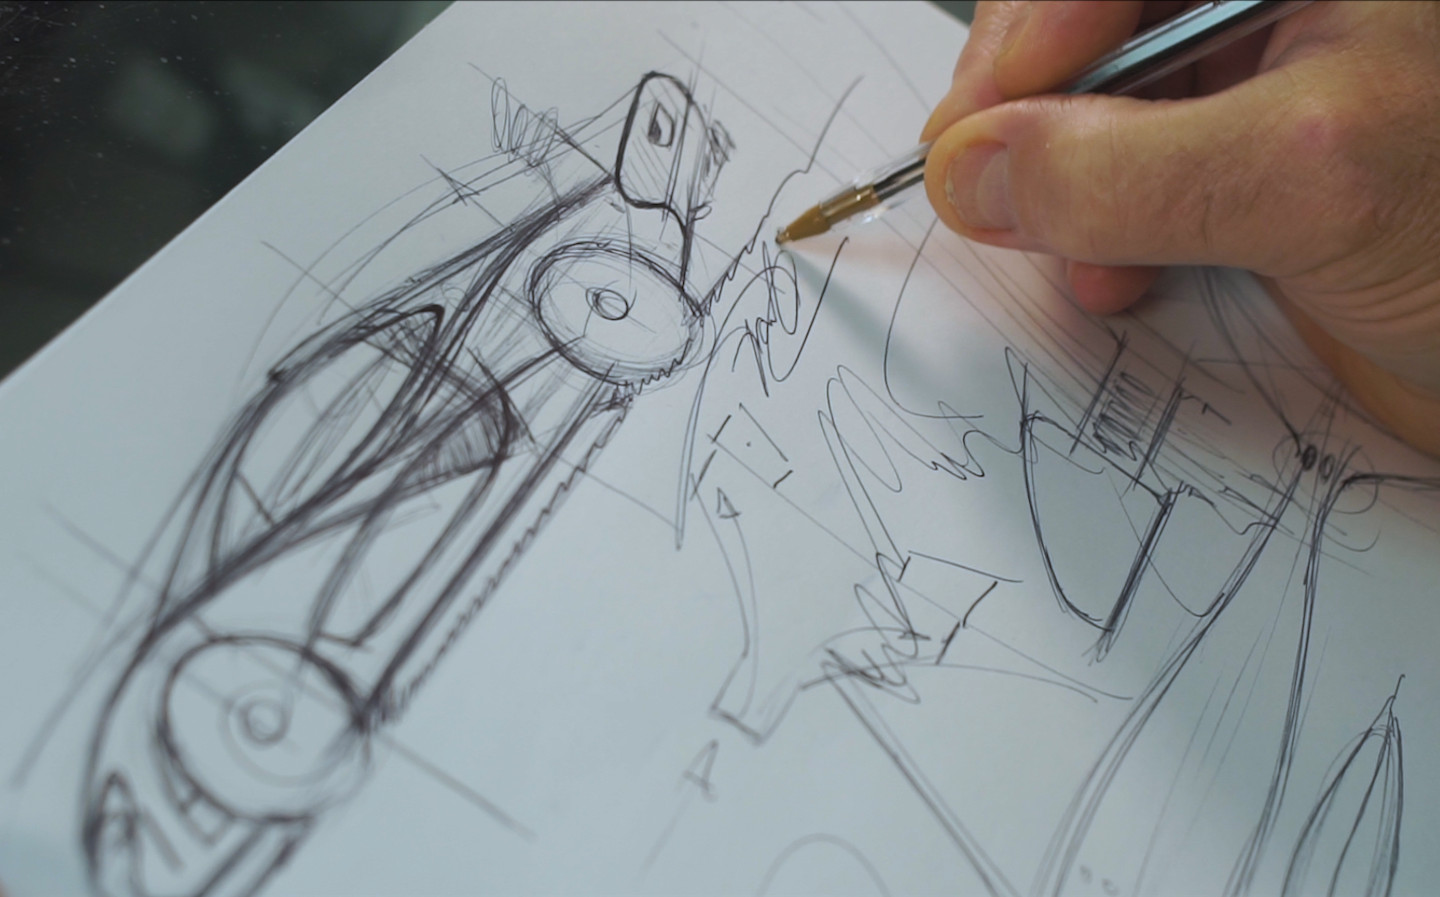 McLaren P1 designer sells sketches for charity